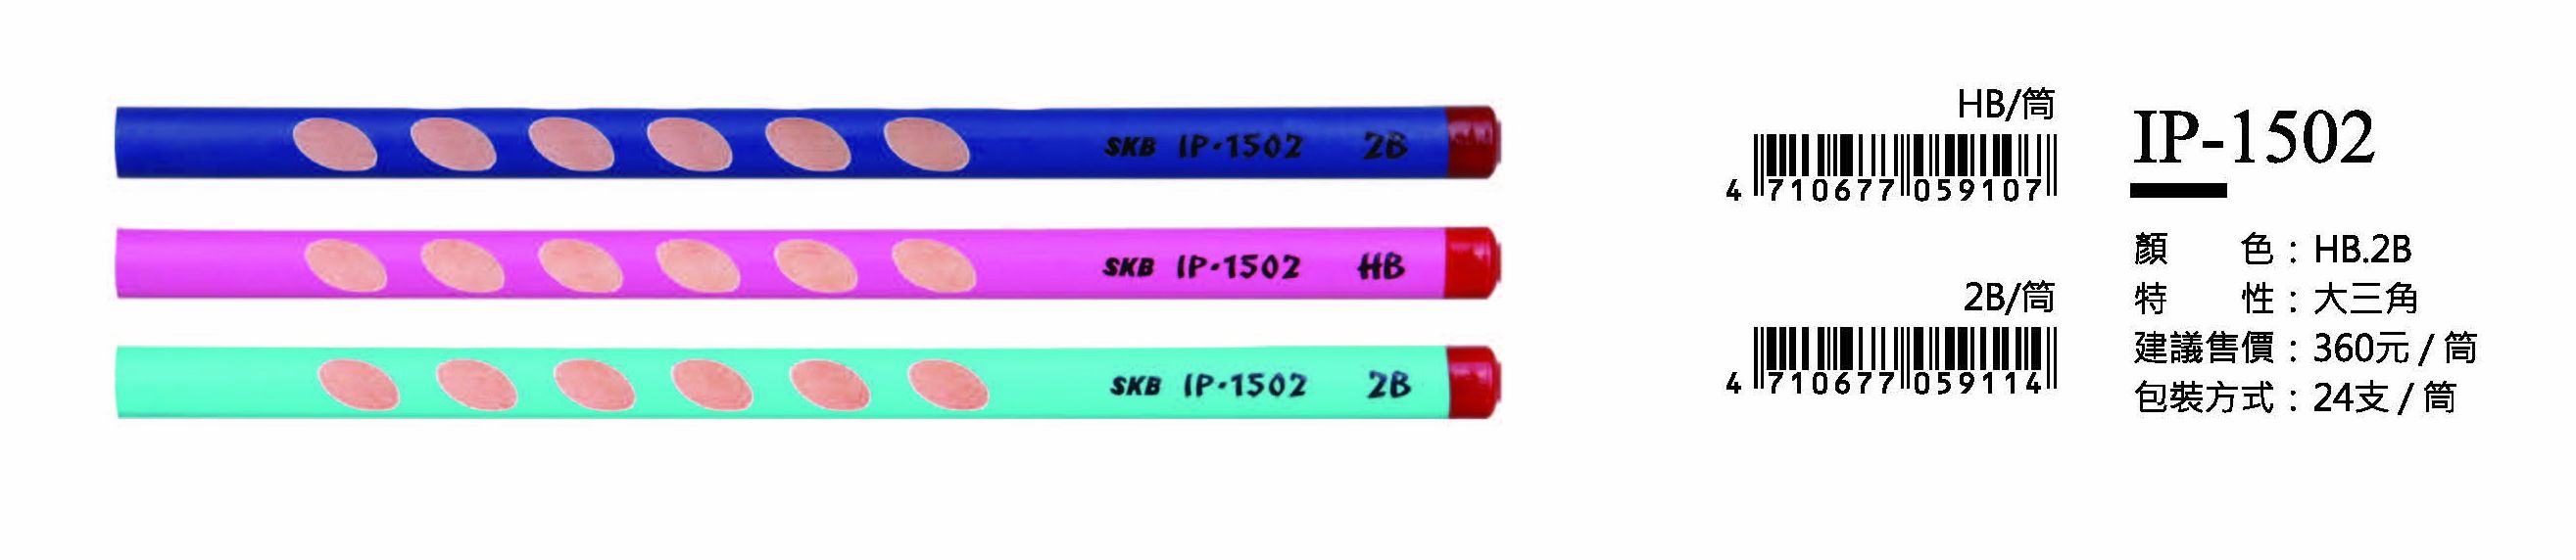 SKB大三角鉛筆-NB.2B-最低訂購14筒(24支/1筒)